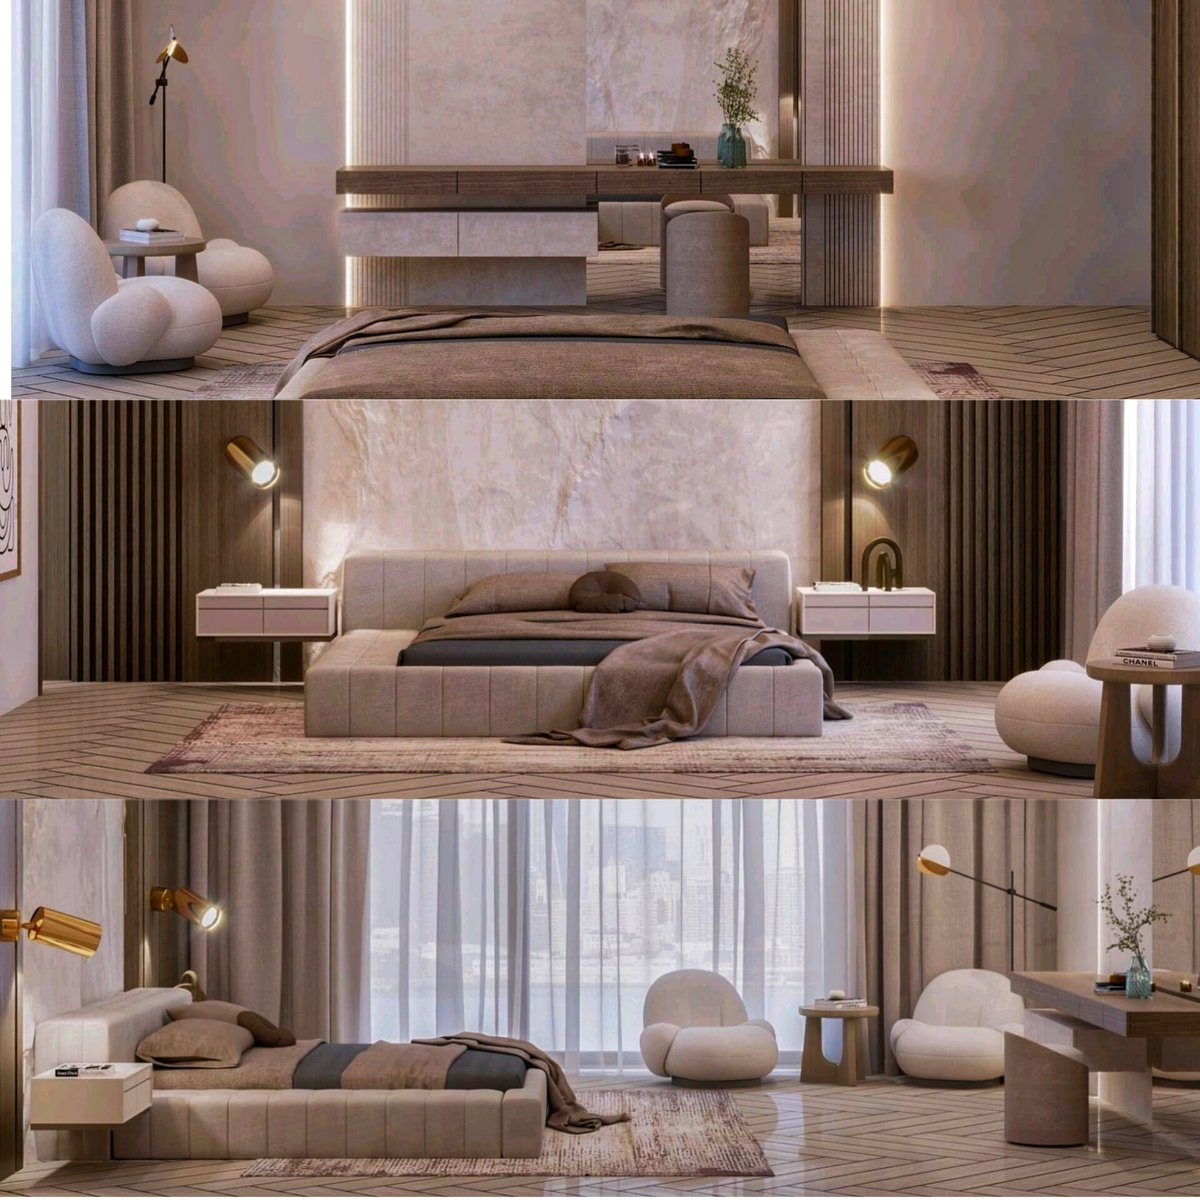 Minimalistic bedroom interior🤍
#homegoals #HomeAesthetics #DesignRevival #CreativeSpaces #ChicLiving #HomeStylelnspo #InteriorHarmony #DecorDiscovery #renovationproject #HomeDesignGoals #InteriorDreams